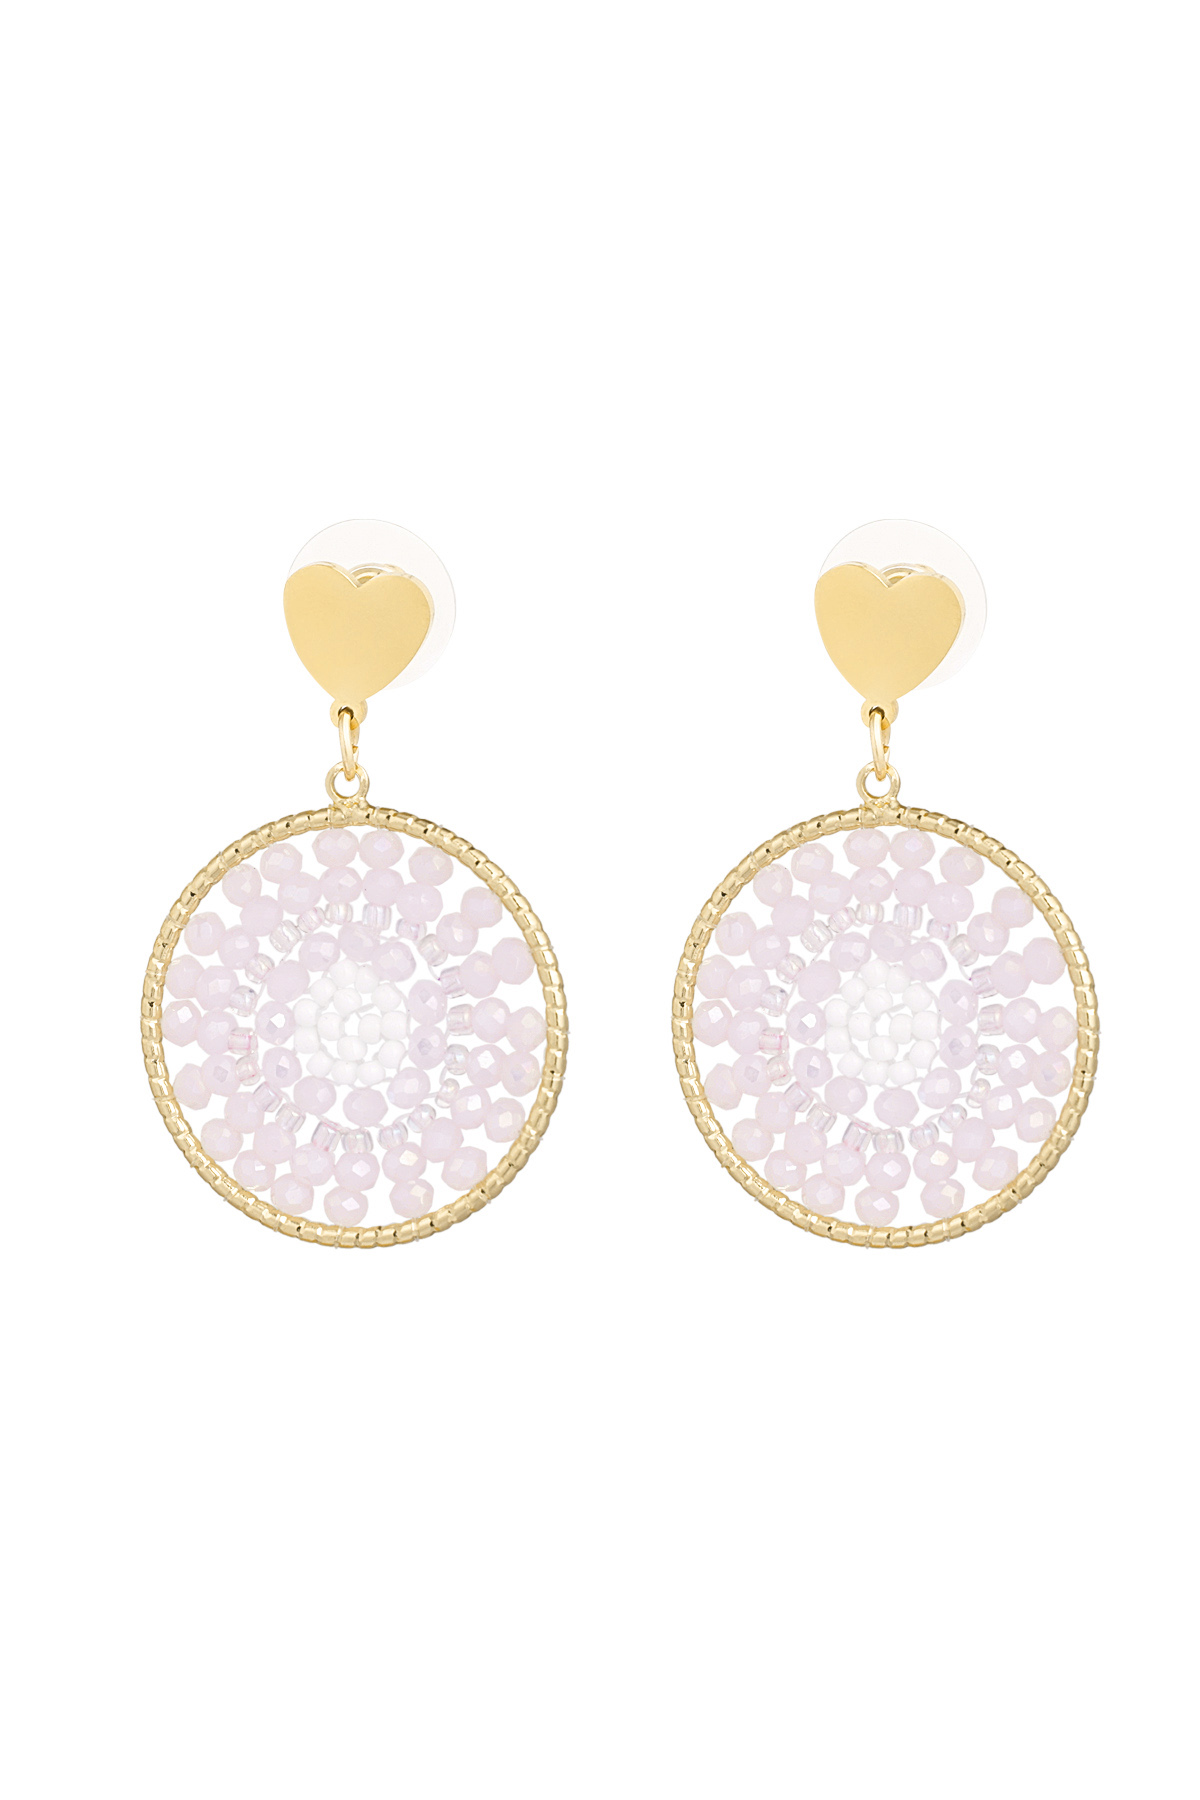 Mandala earrings with heart - pale pink 